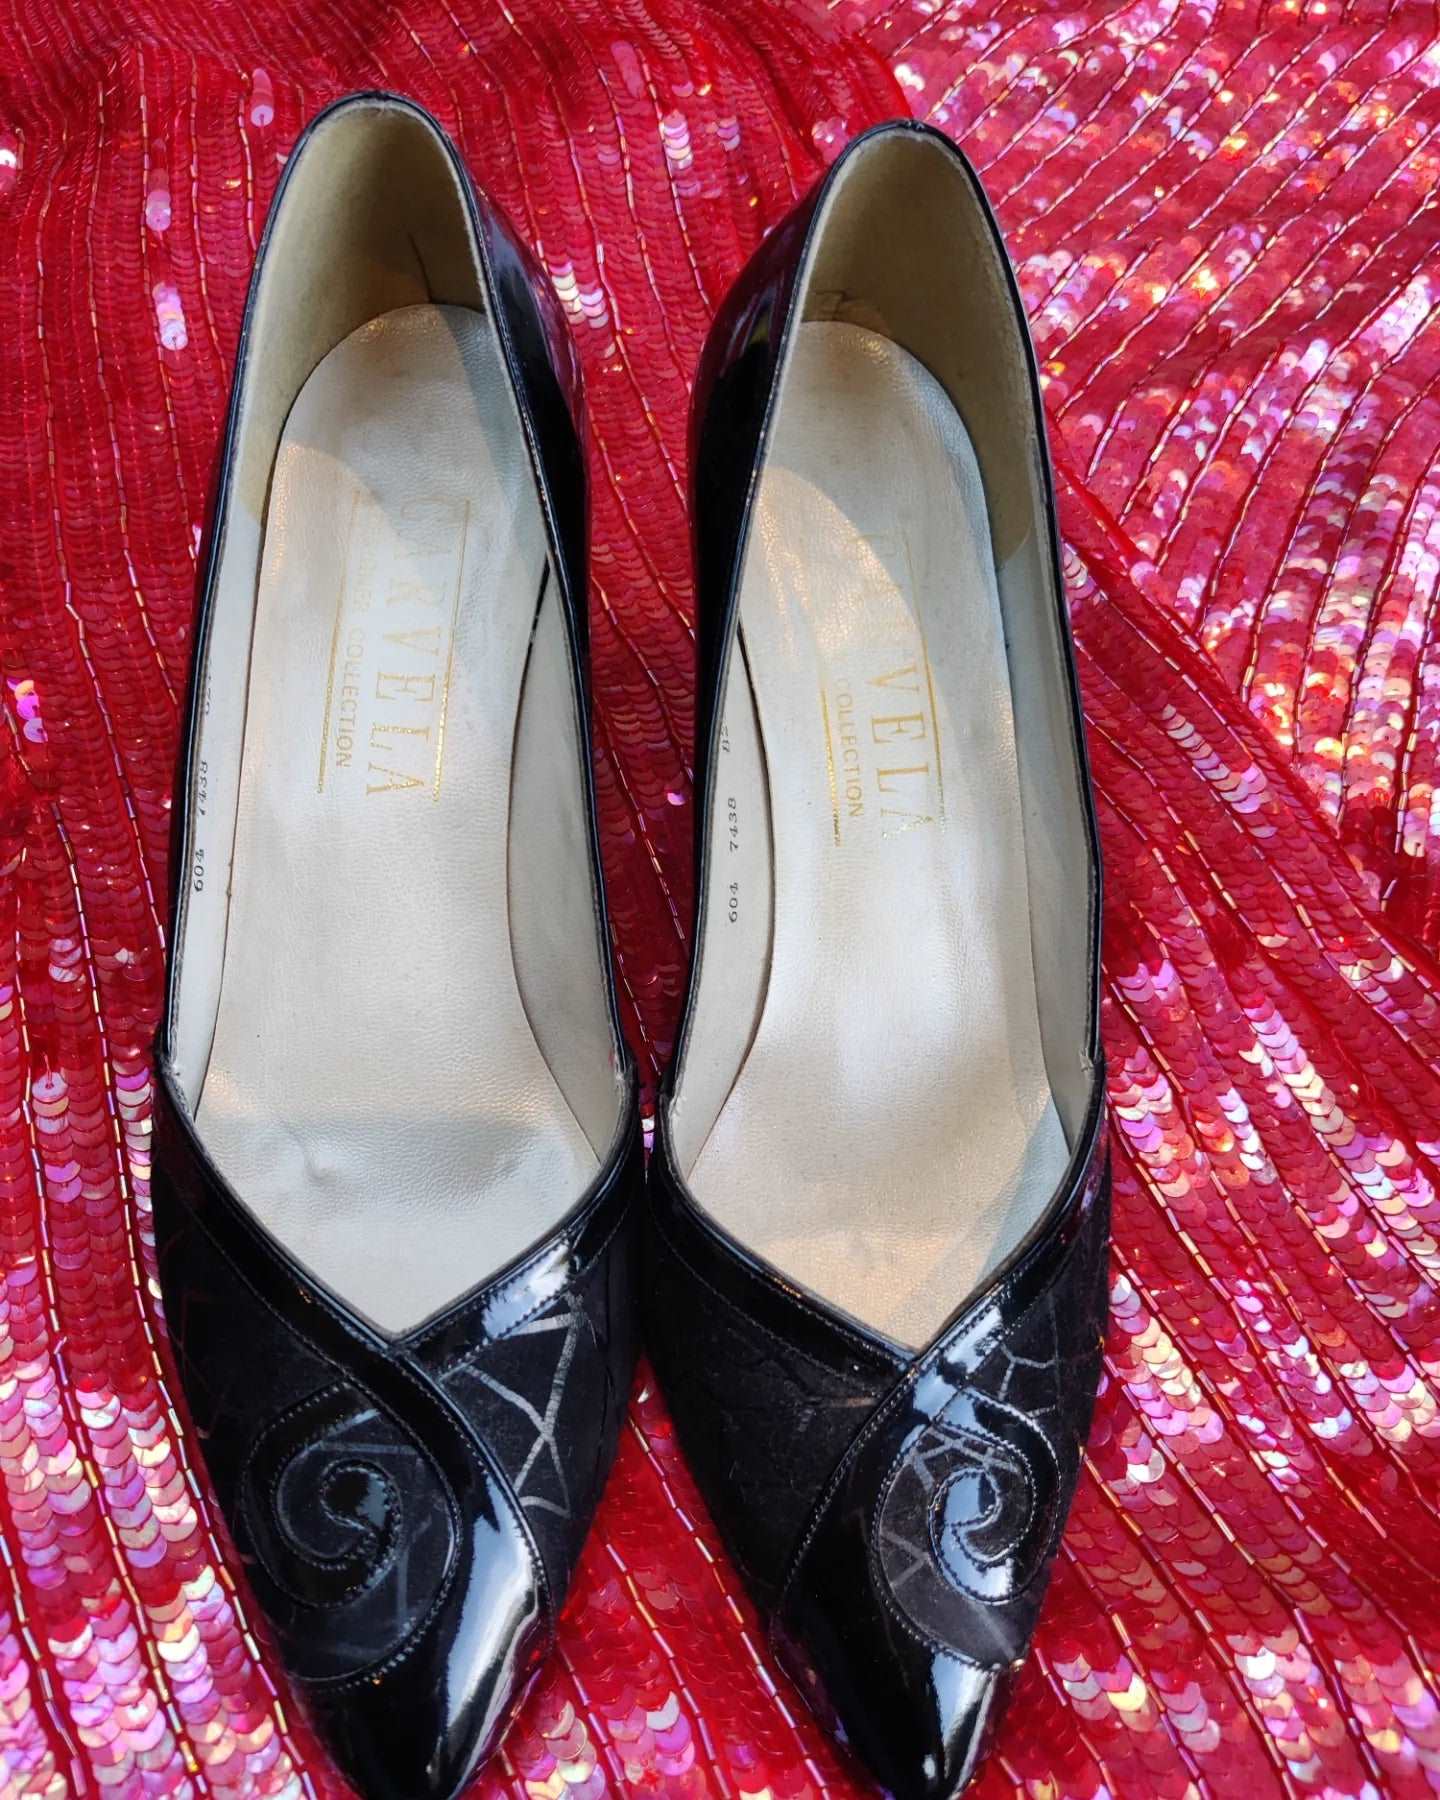 709-Solaris Ellie Shoes, 7 Inch Pointed Stiletto High Heels Sandal